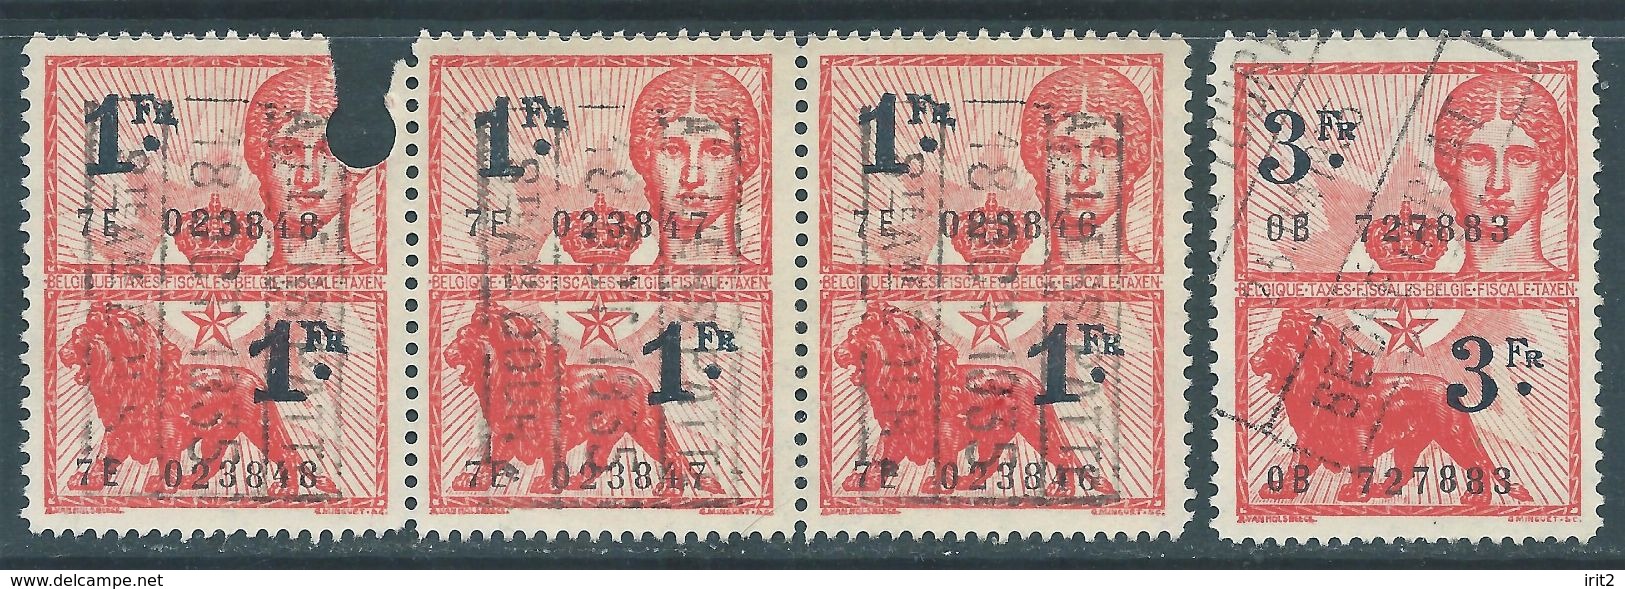 BELGIO BELGIUM BELGIE BELGIQUE,Revenue Stamps Tax - 1.Fr In Blocks And 3.Fr Used - Stamps